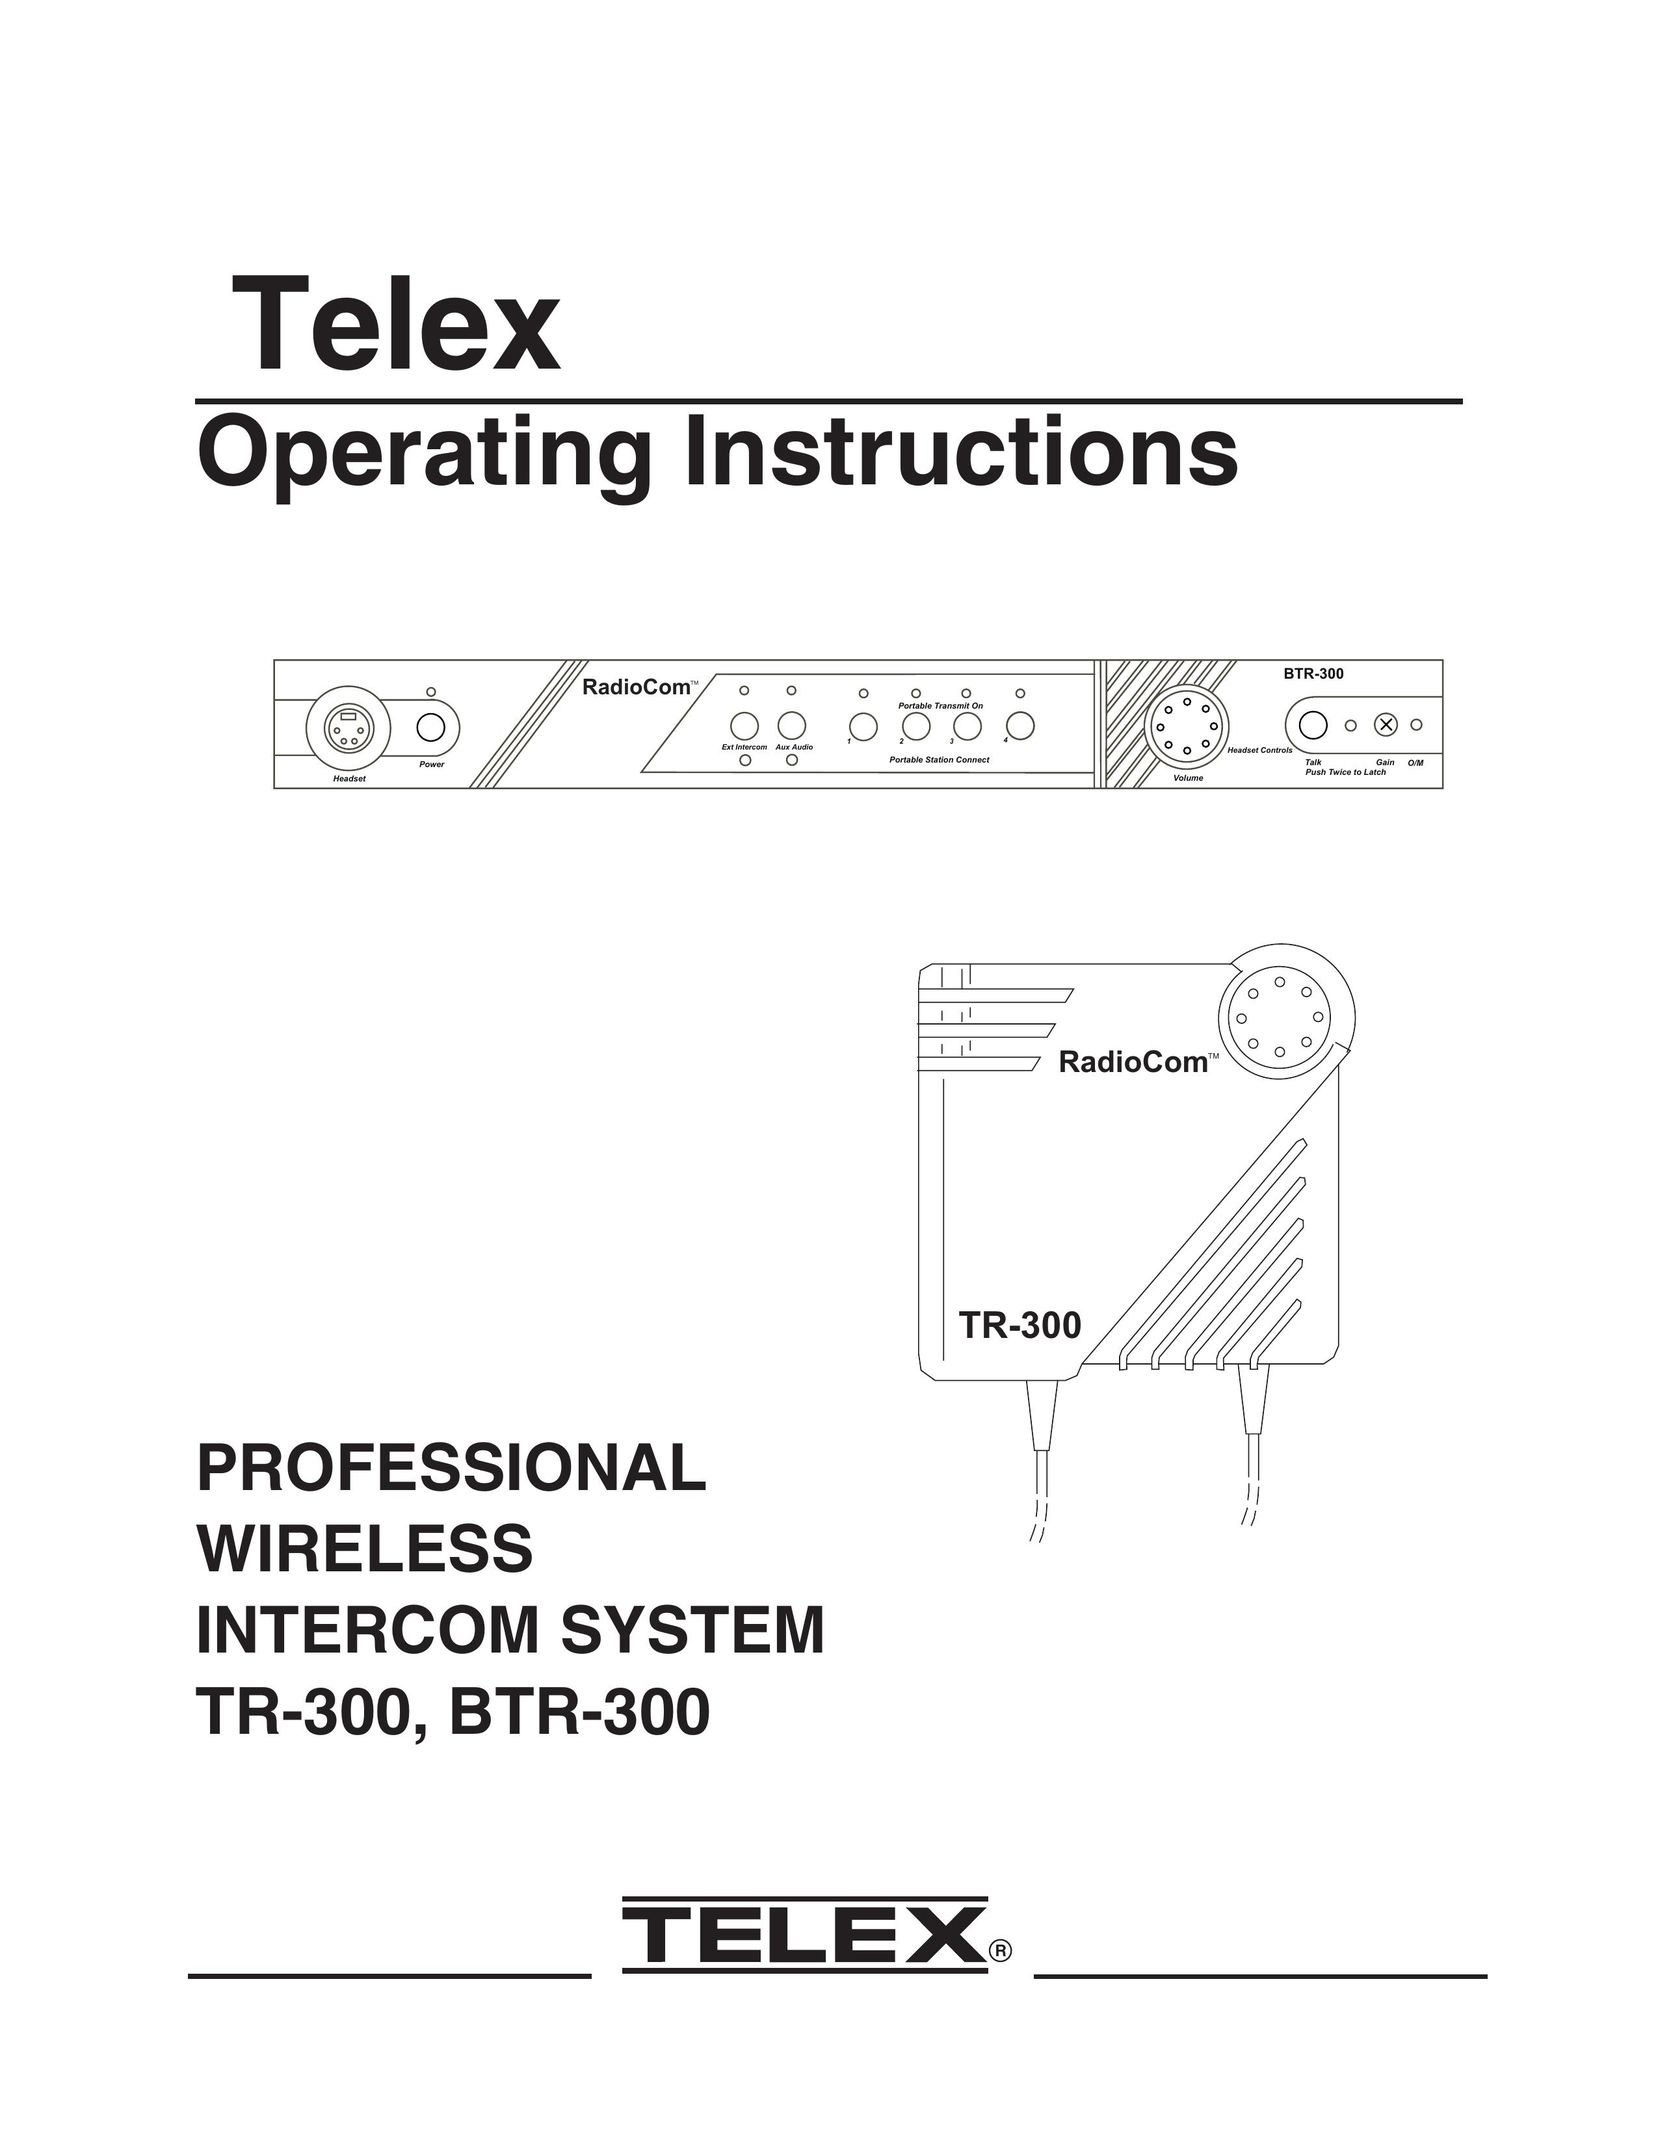 Telex BTR-300 Intercom System User Manual